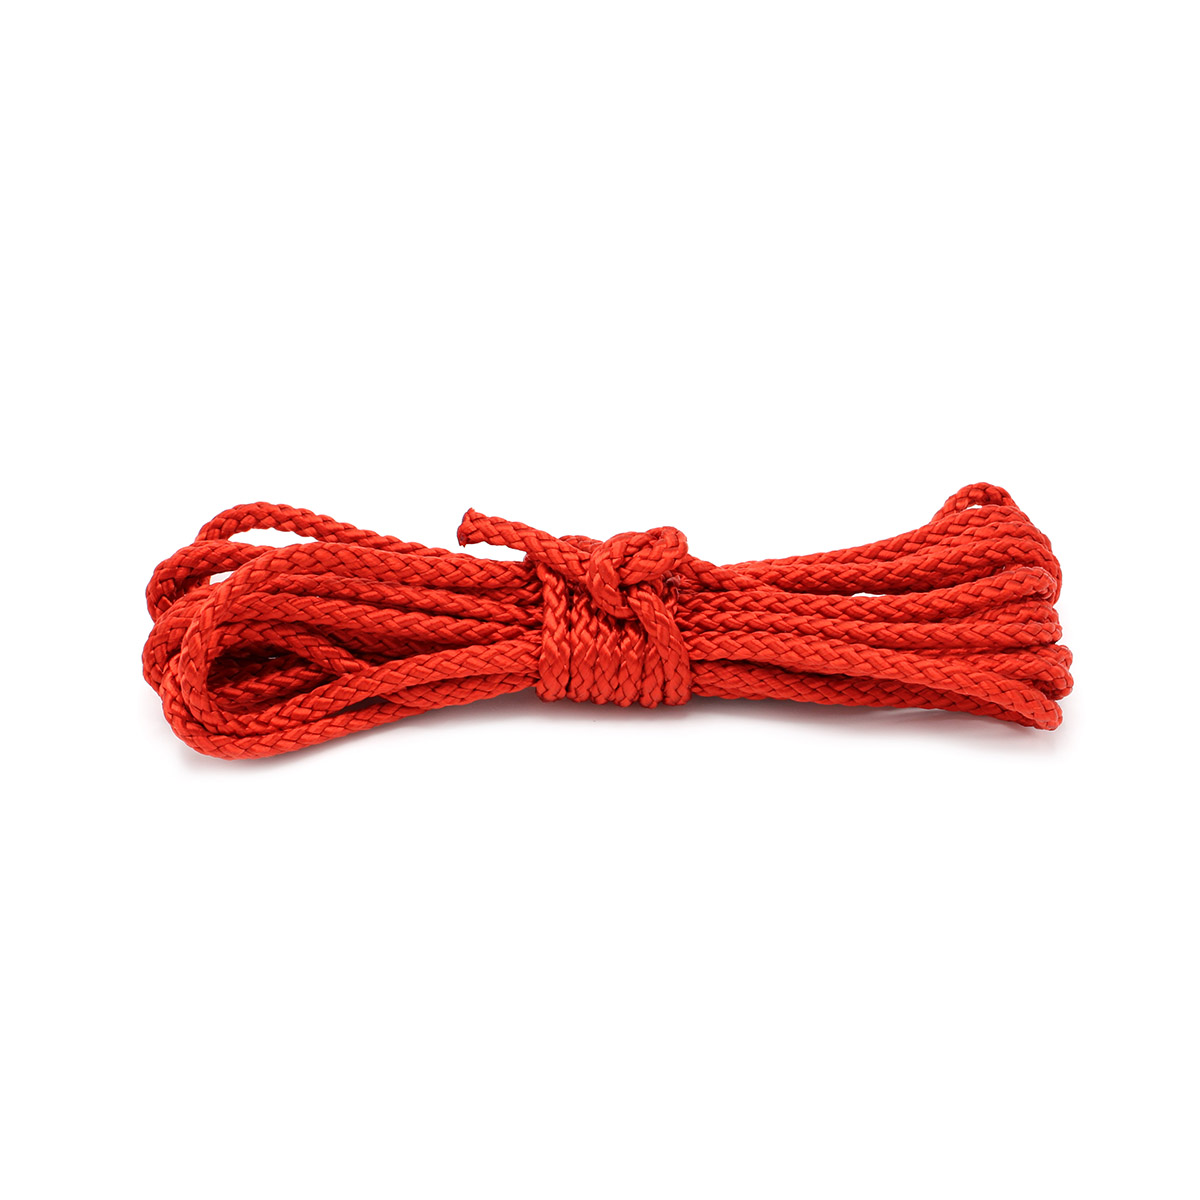 Deluxe-Bondage-Rope-5-M-Red-134-KIO-0309-1